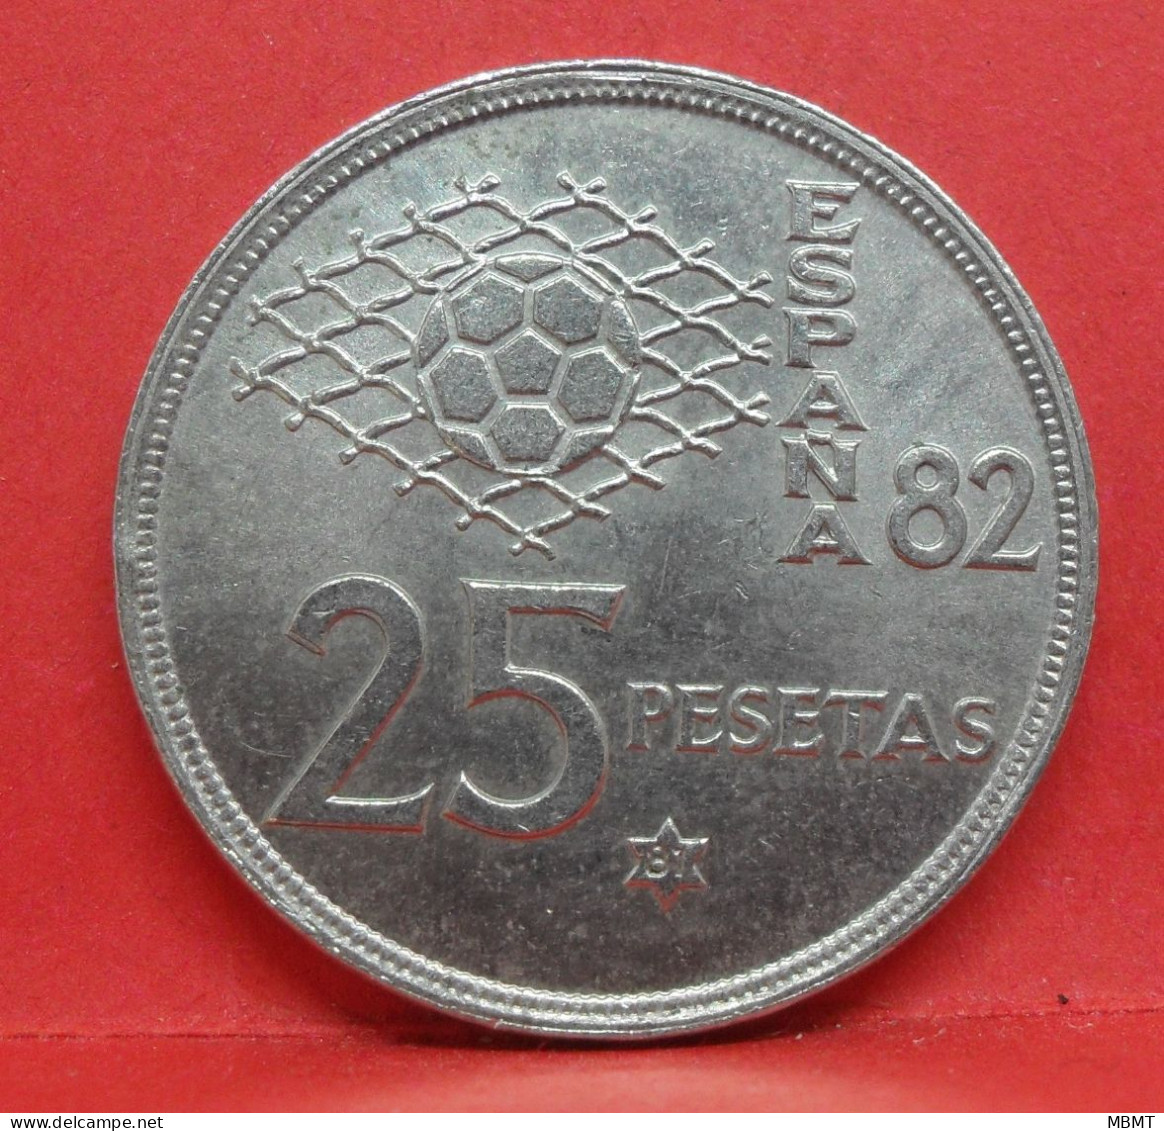 25 Pesetas 1980 étoile 81 - SUP - Pièce Monnaie Espagne - Article N°2456 - 25 Pesetas